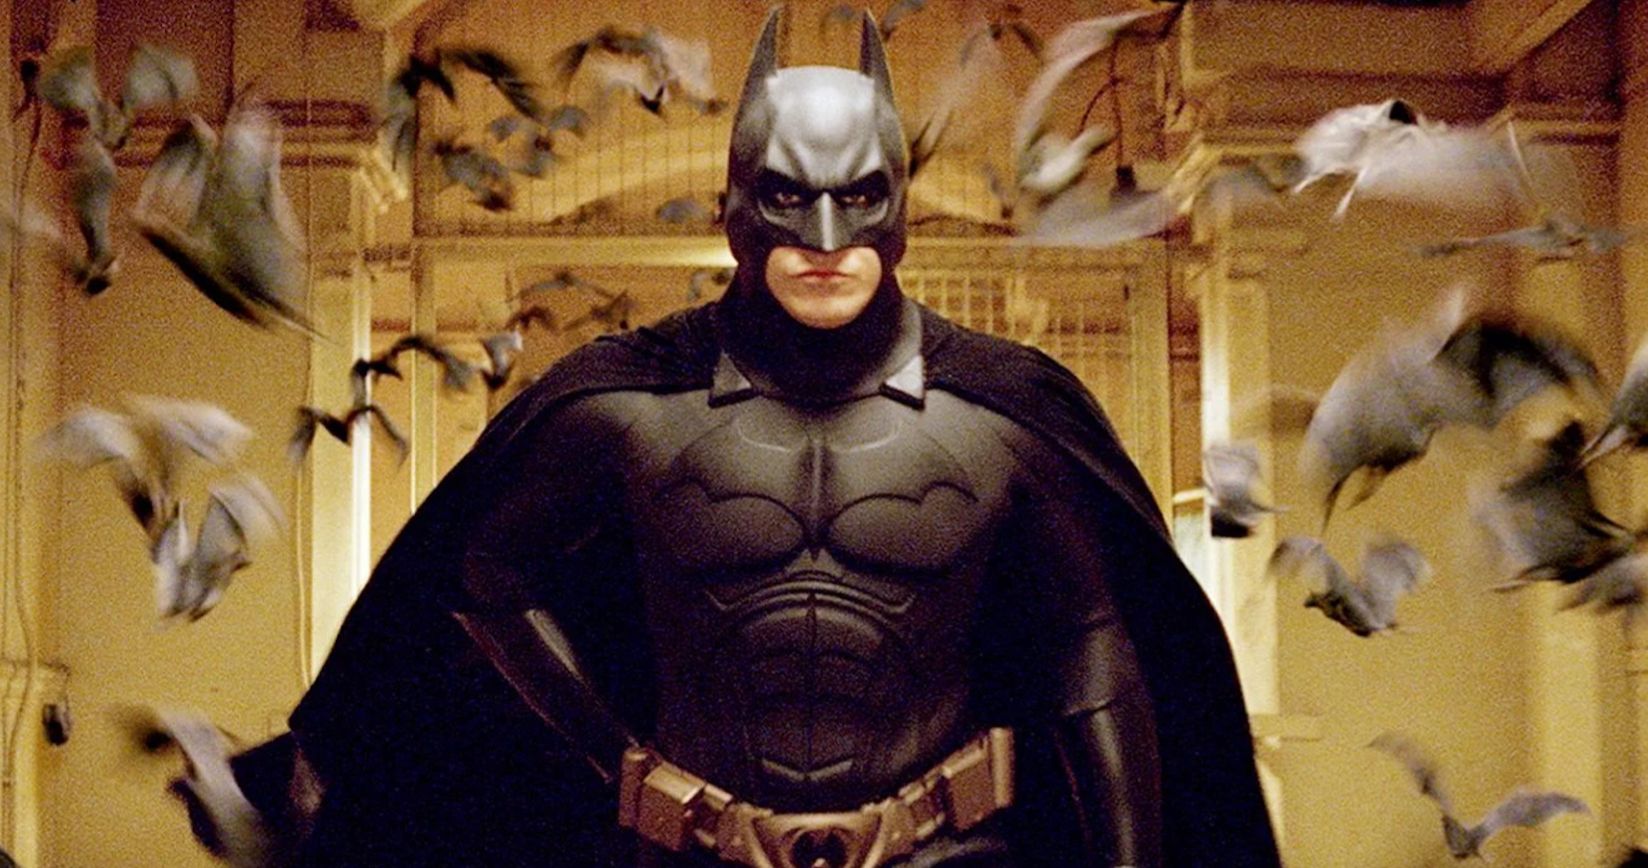 Batman Begins 16th Anniversary Celebrated by Dark Knight Trilogy Fans